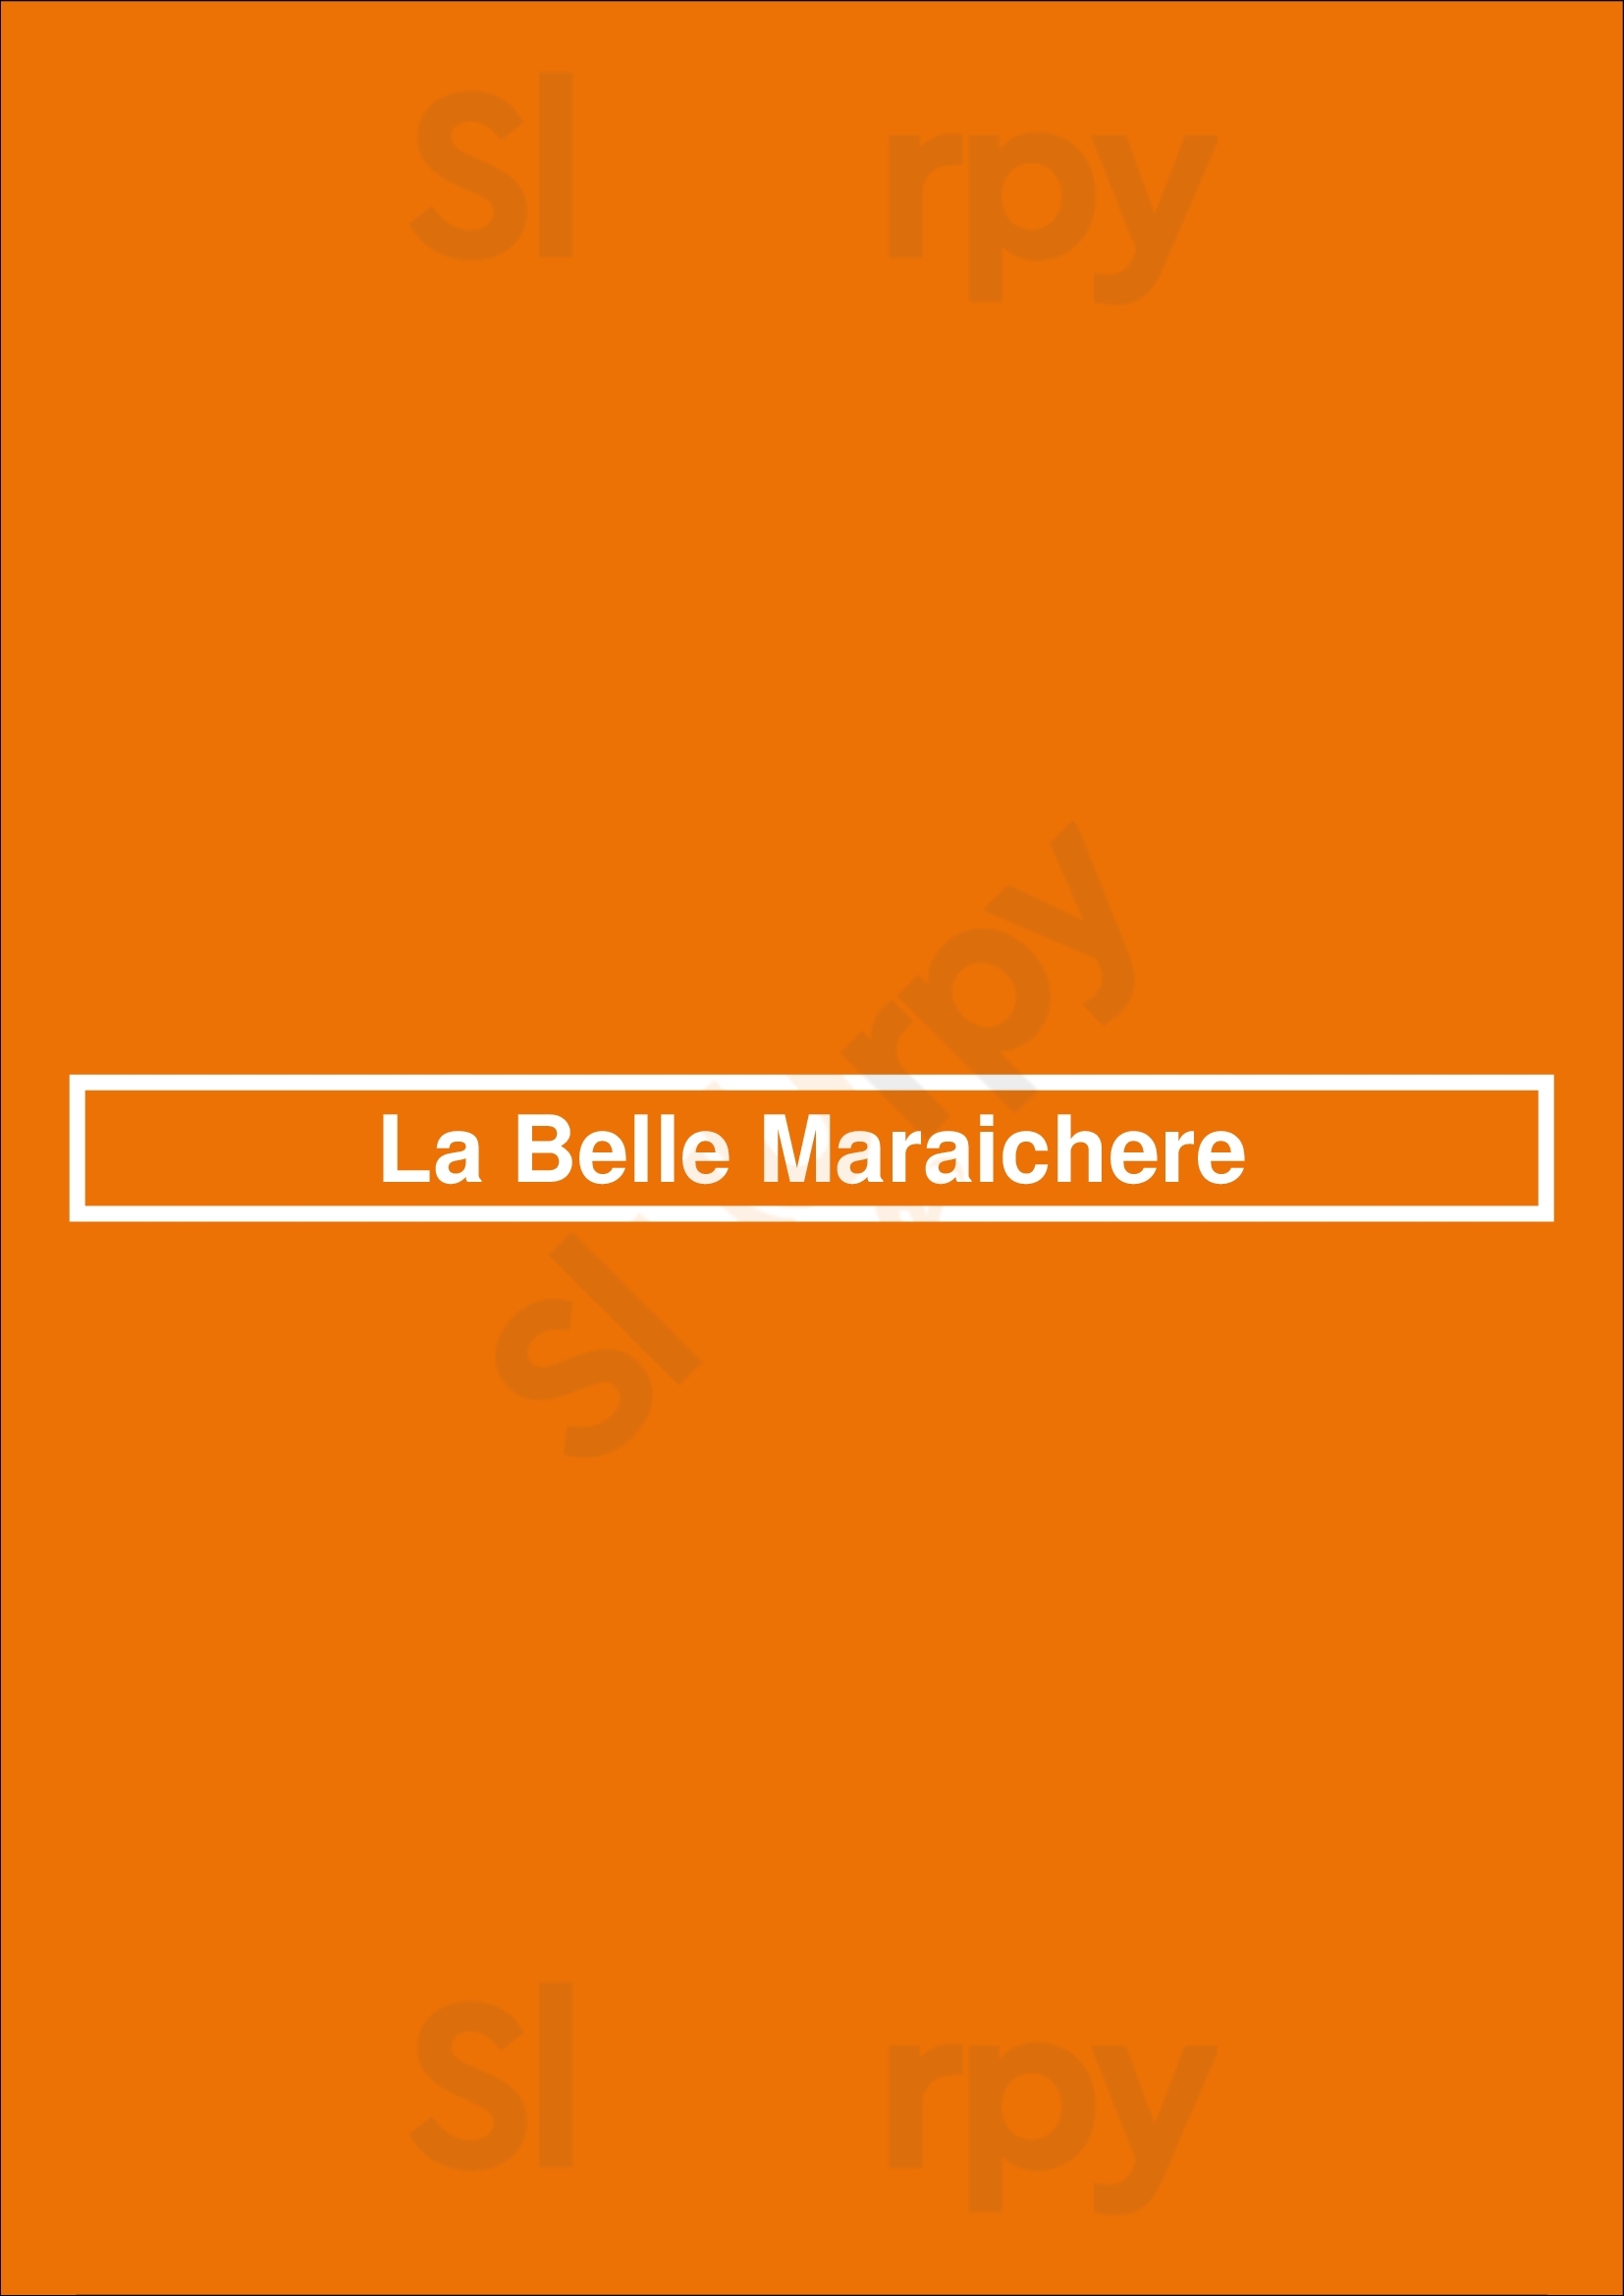 La Belle Maraichere Bruxelles Menu - 1